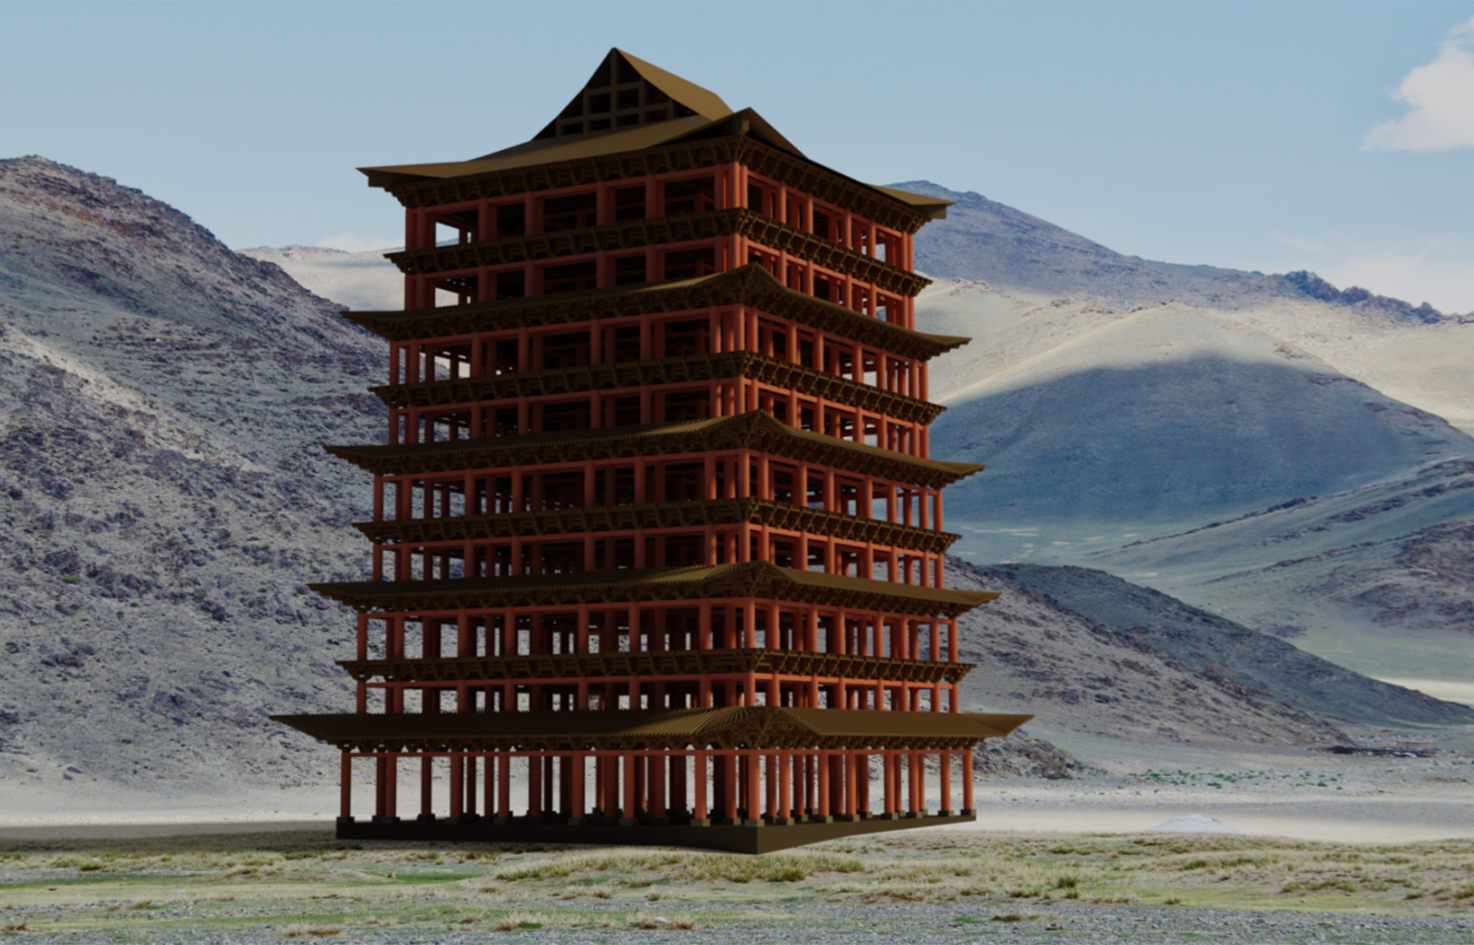 Virtual reconstruction of the temple of the medieval Mongol capital Qara Qorum.